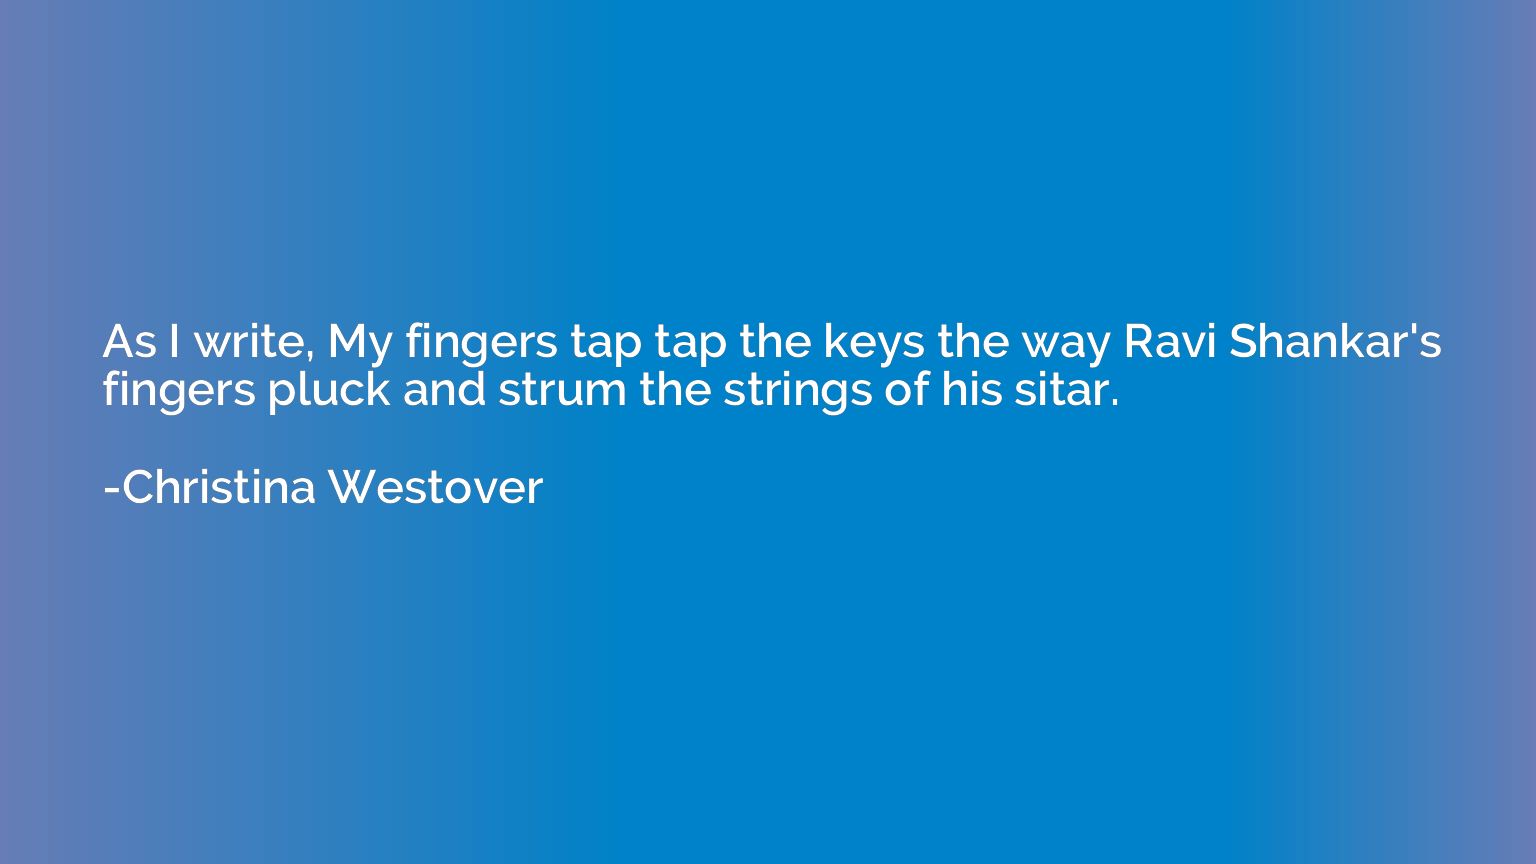 As I write, My fingers tap tap the keys the way Ravi Shankar